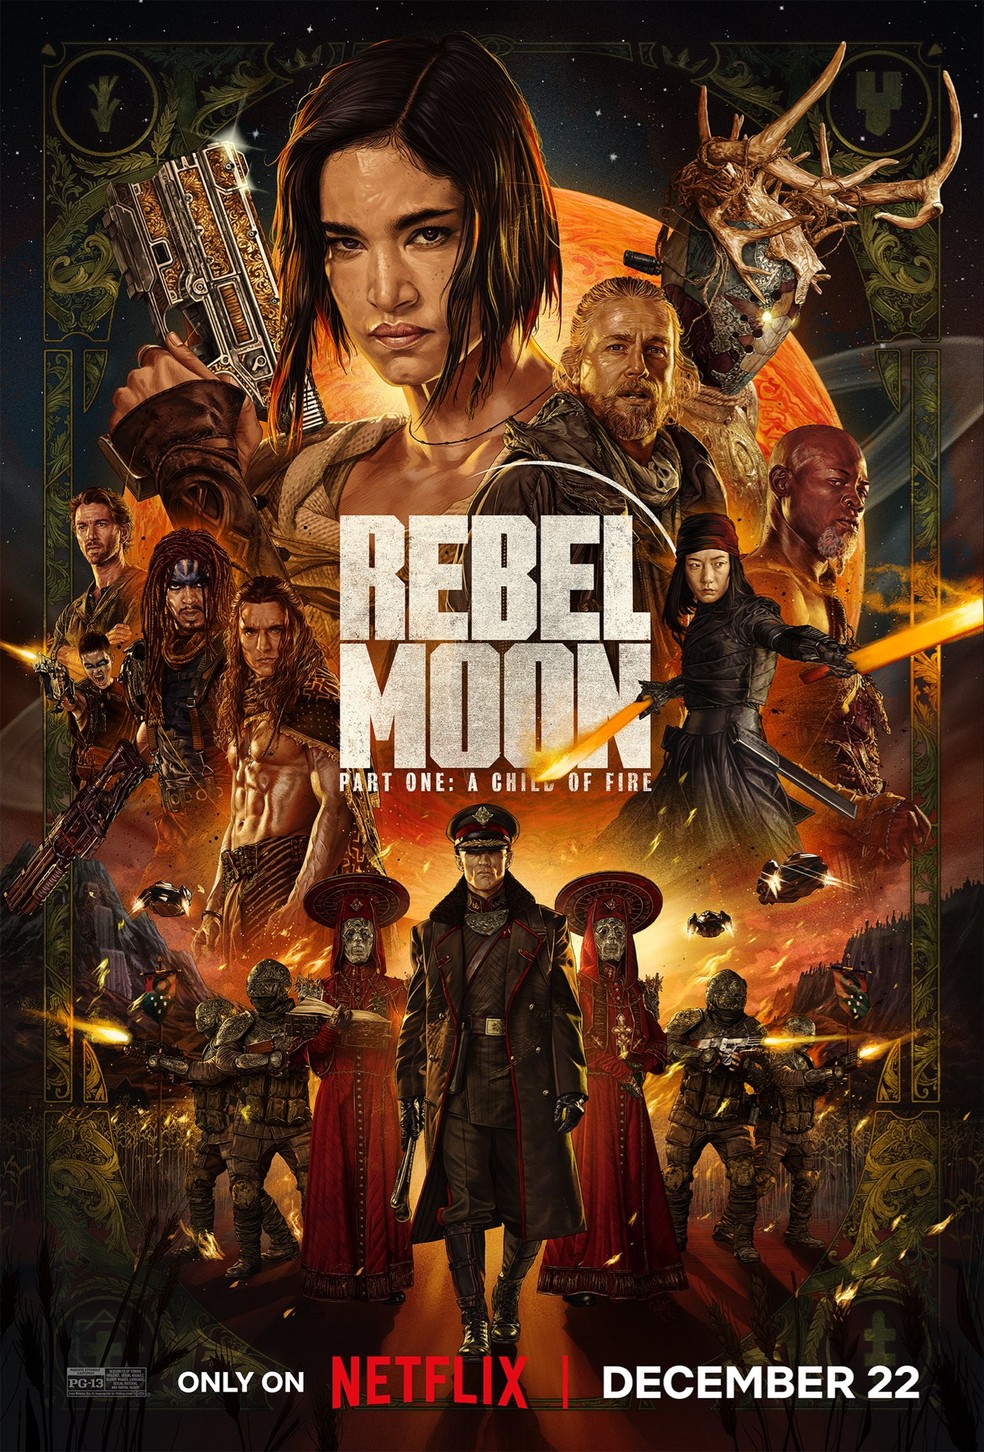 Estreia em dezembro: Netflix revela key art inédita de Rebel Moon